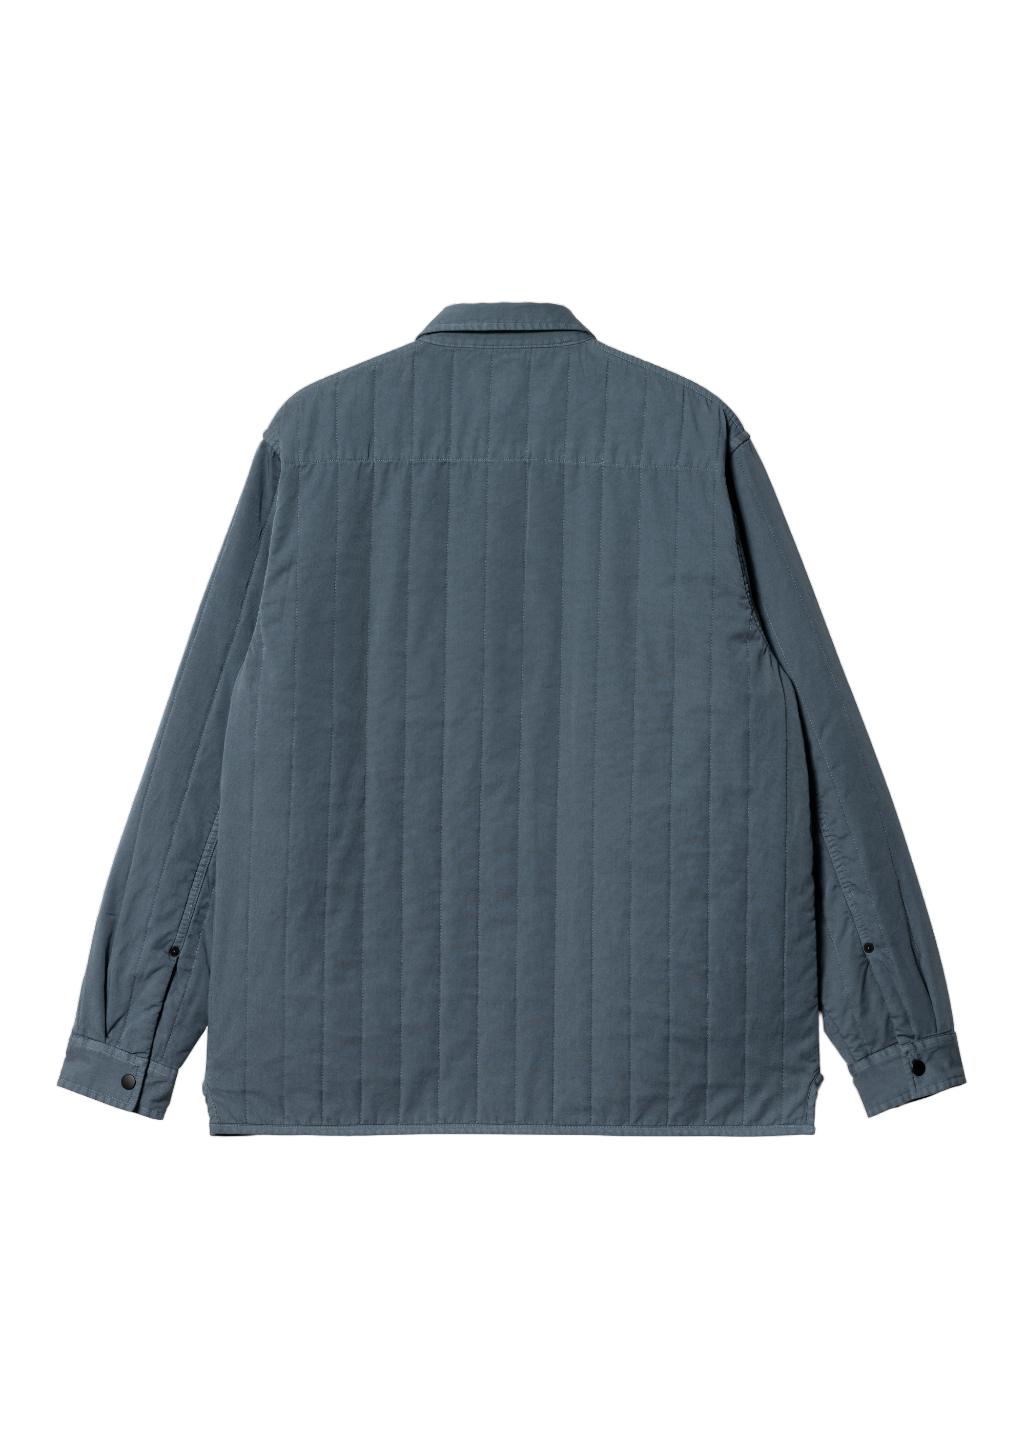 Carhartt WIP - Skyler Shirt Jac - Storm Blue Garment Dyed - Hardpressed Print Studio Inc.